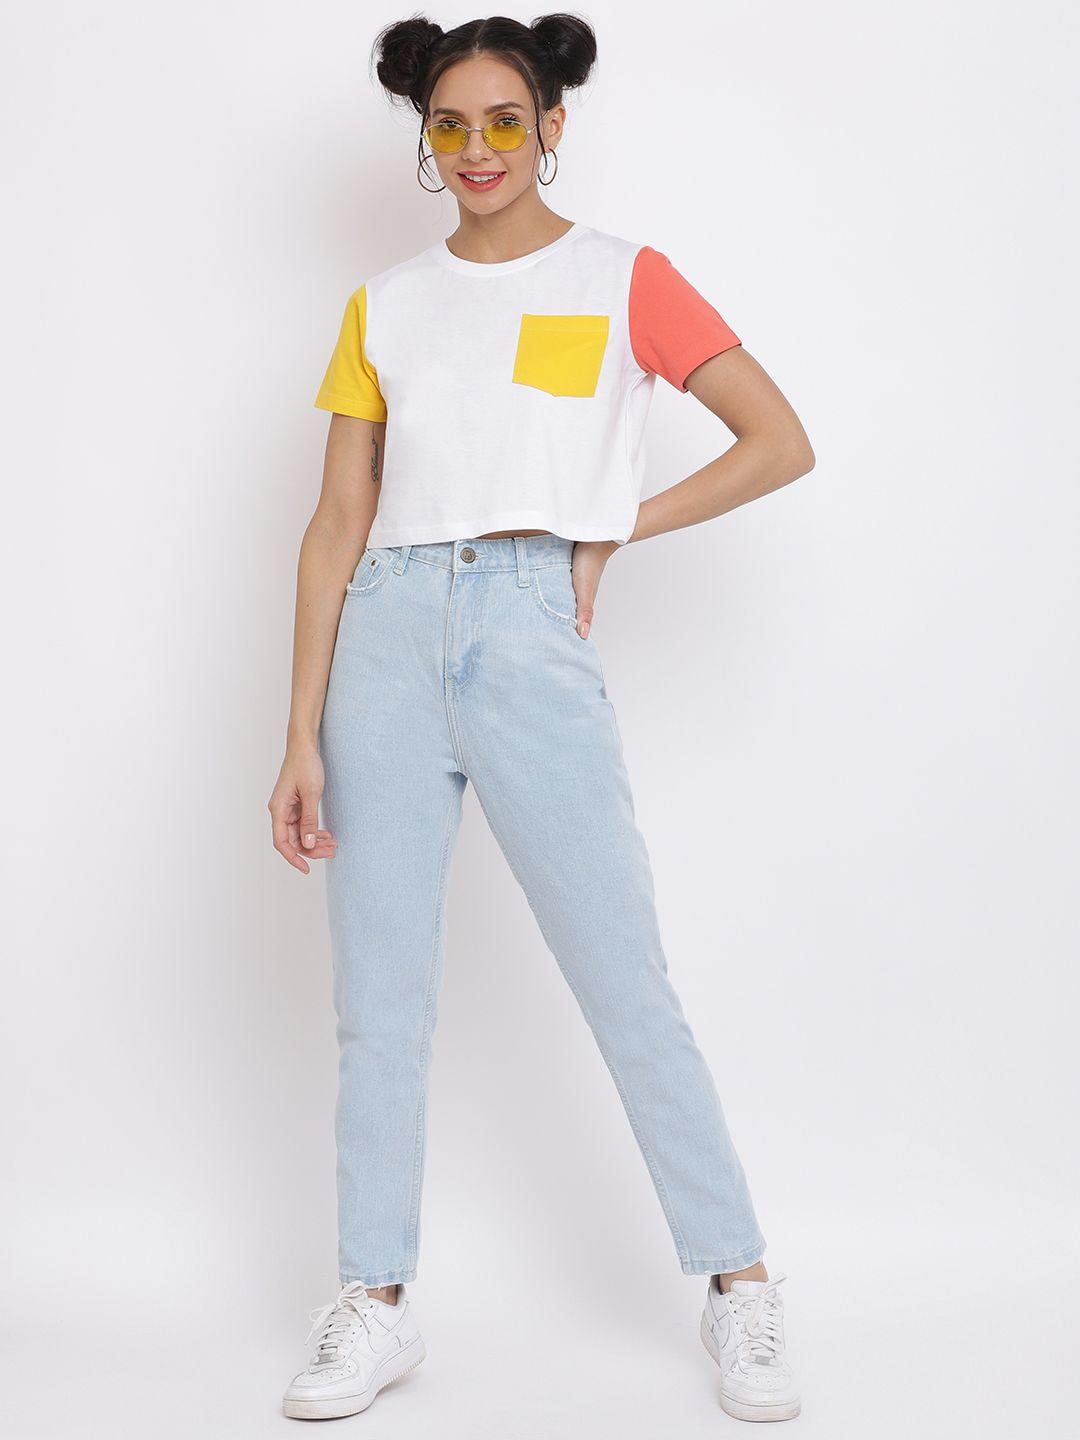 belliskey women white & yellow colourblocked pockets crop t-shirt